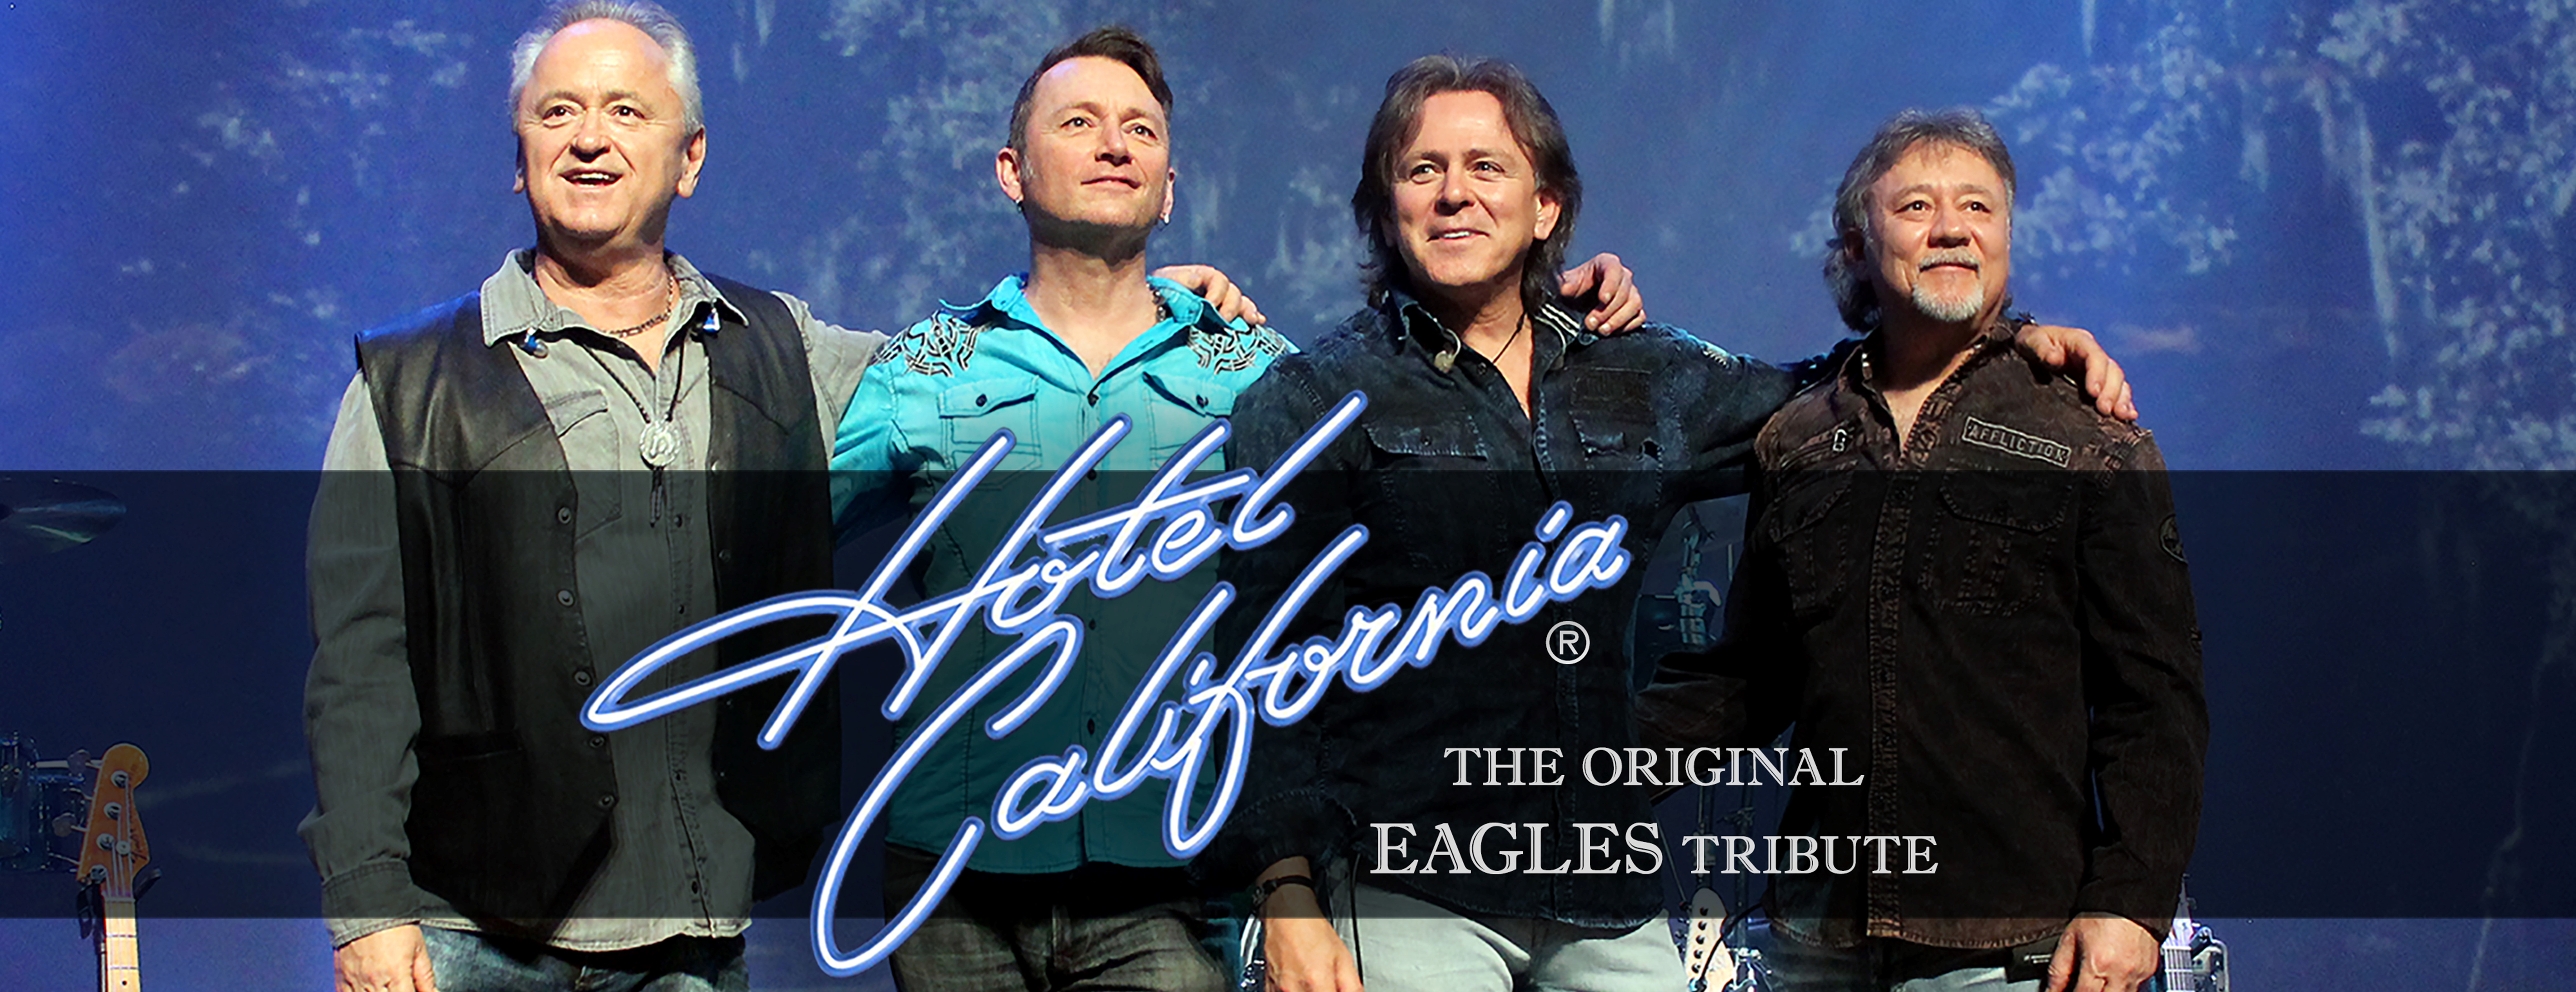 Hotel California The Original Eagles Tribute